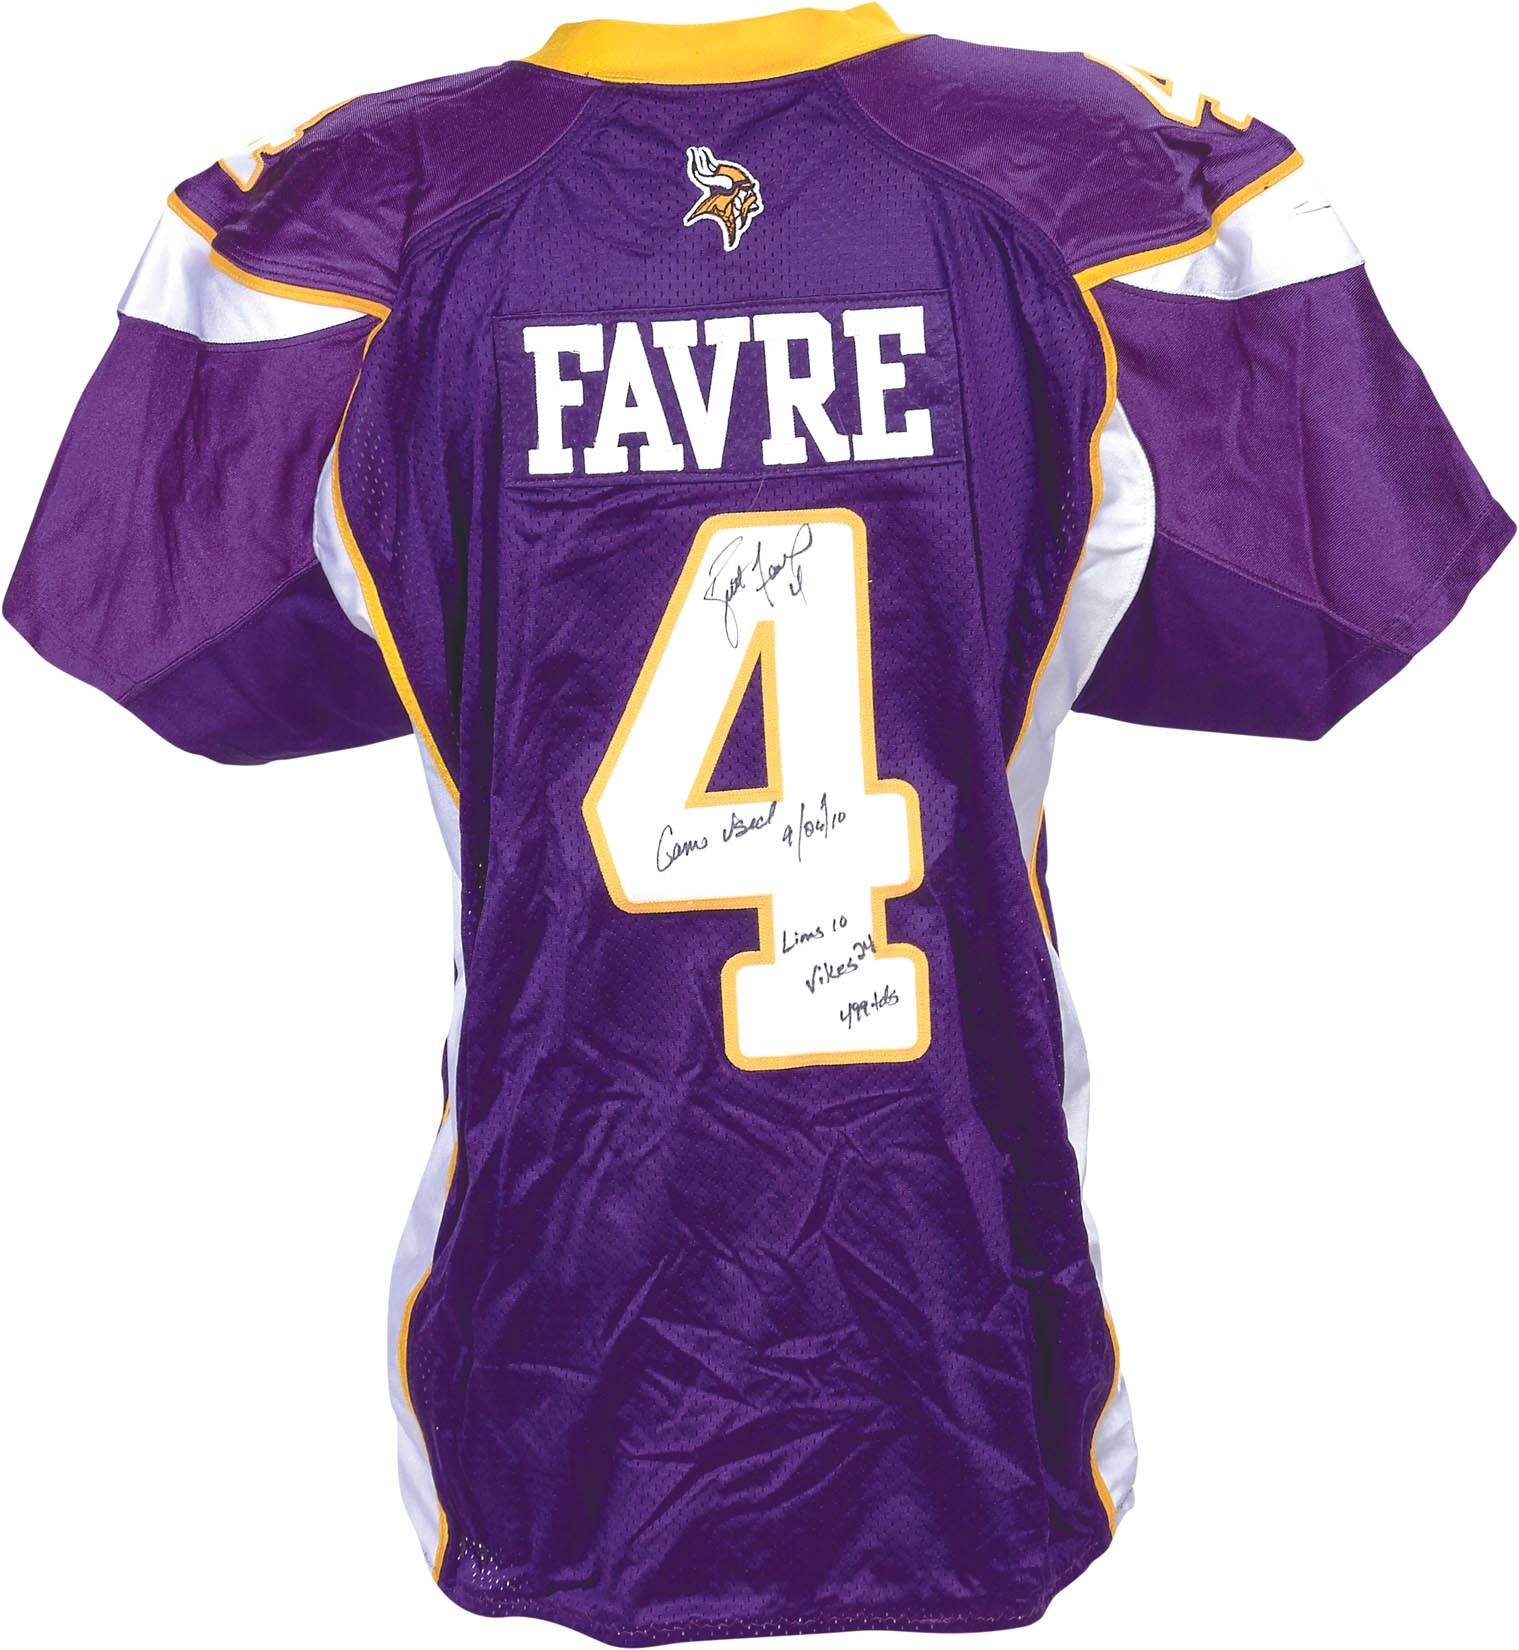 - 2010 Brett Favre Minnesota Vikings 499th Touchdown Game Worn Jersey (Photo-Matched, Favre LOA)